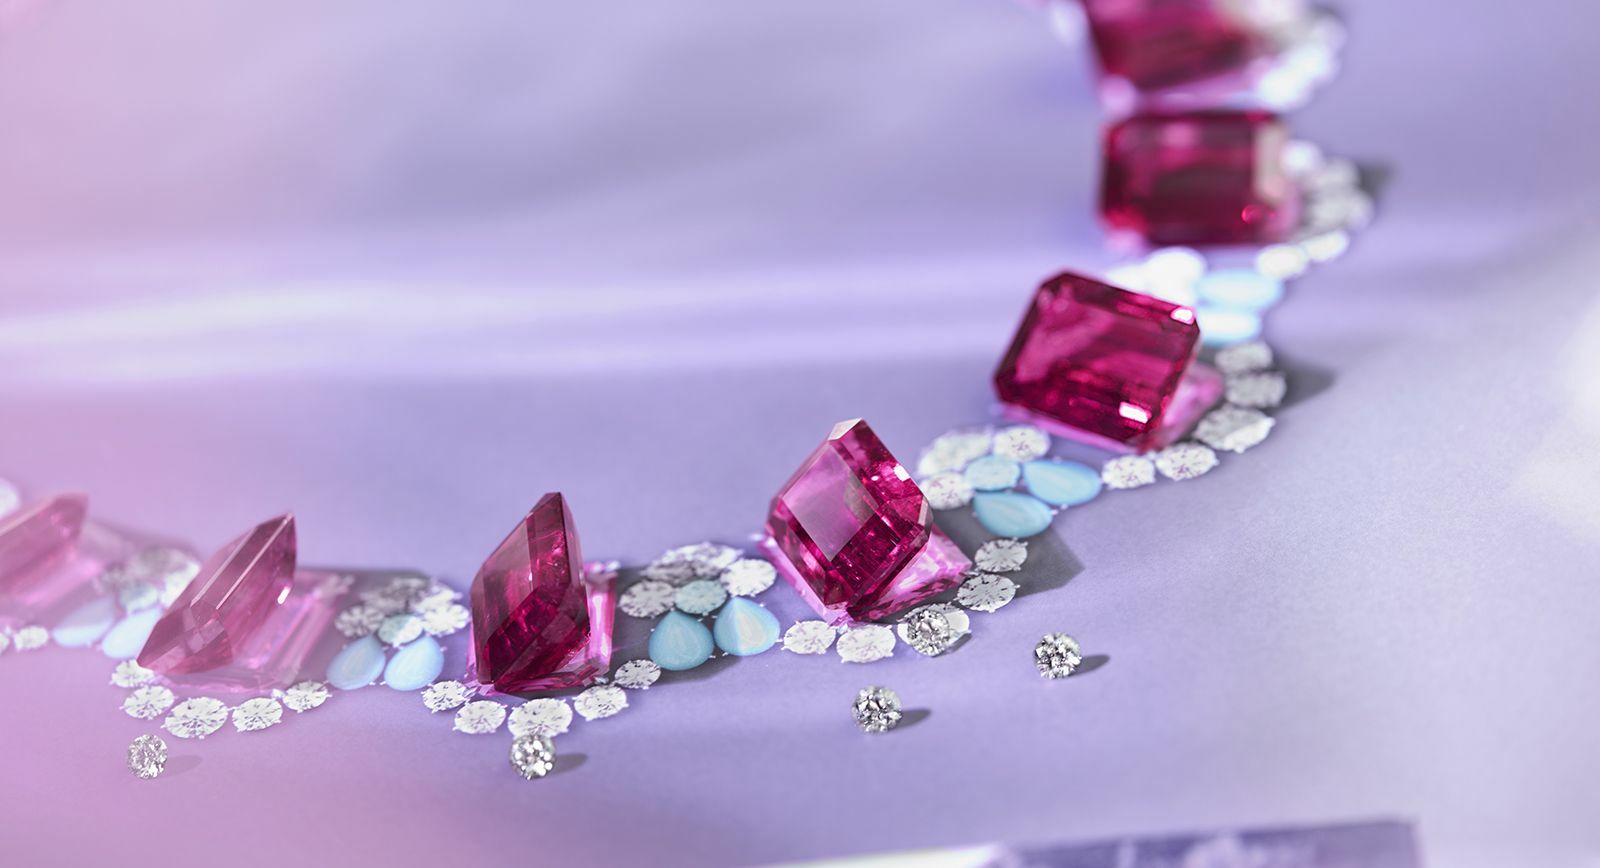 Winston Cluster Pink Sapphire and Diamond Pendant